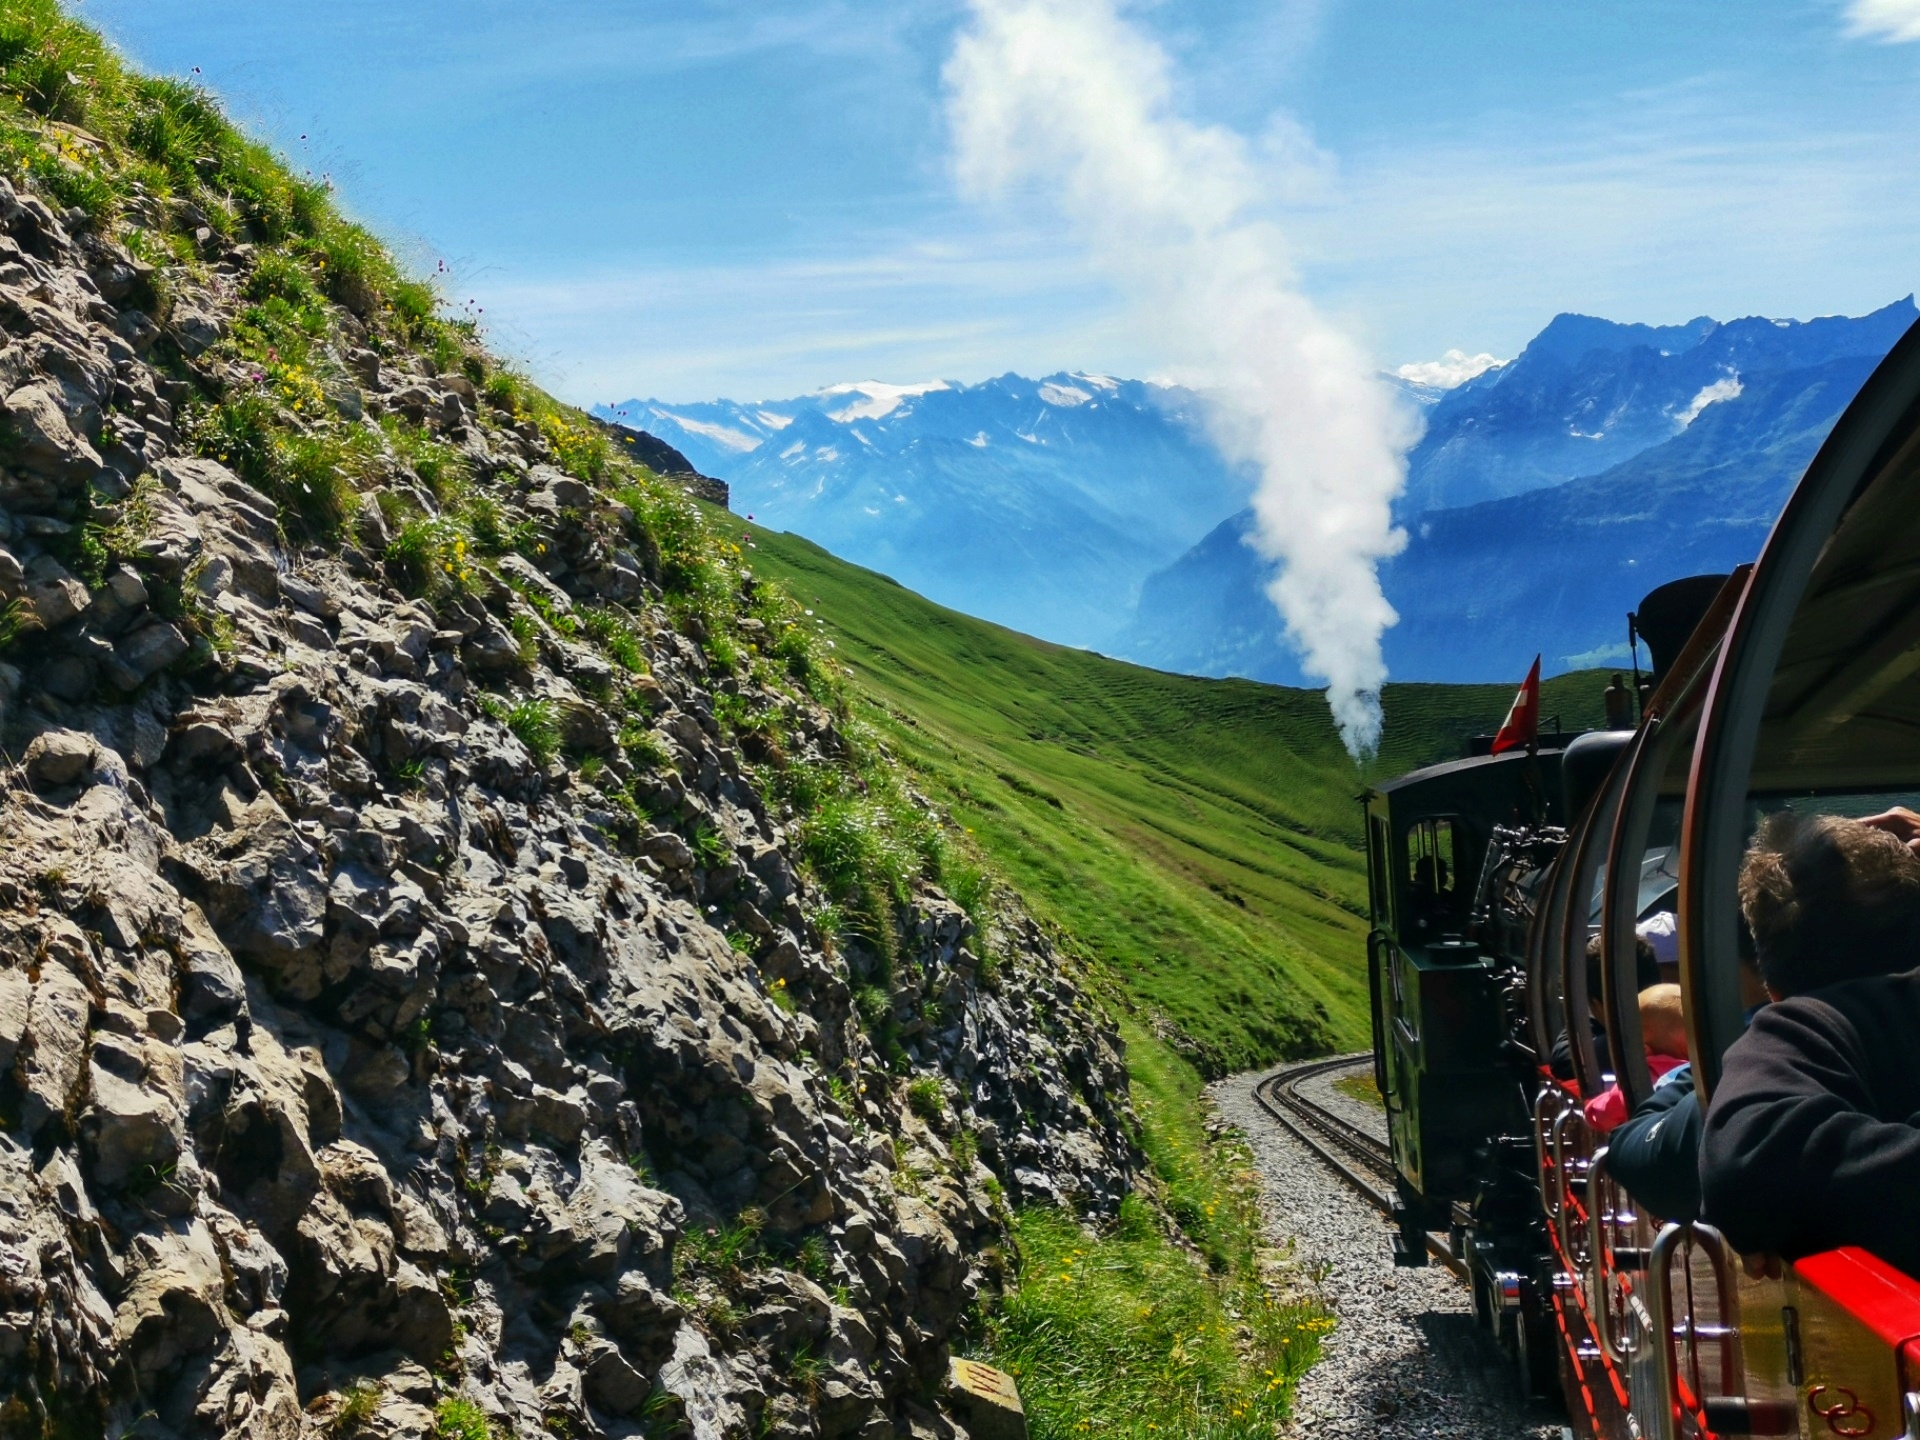 603 (c) Töff, töff steam train… the ride on the steam locomotive is like a breathtaking journey through the mountains (c) Ariane Schild